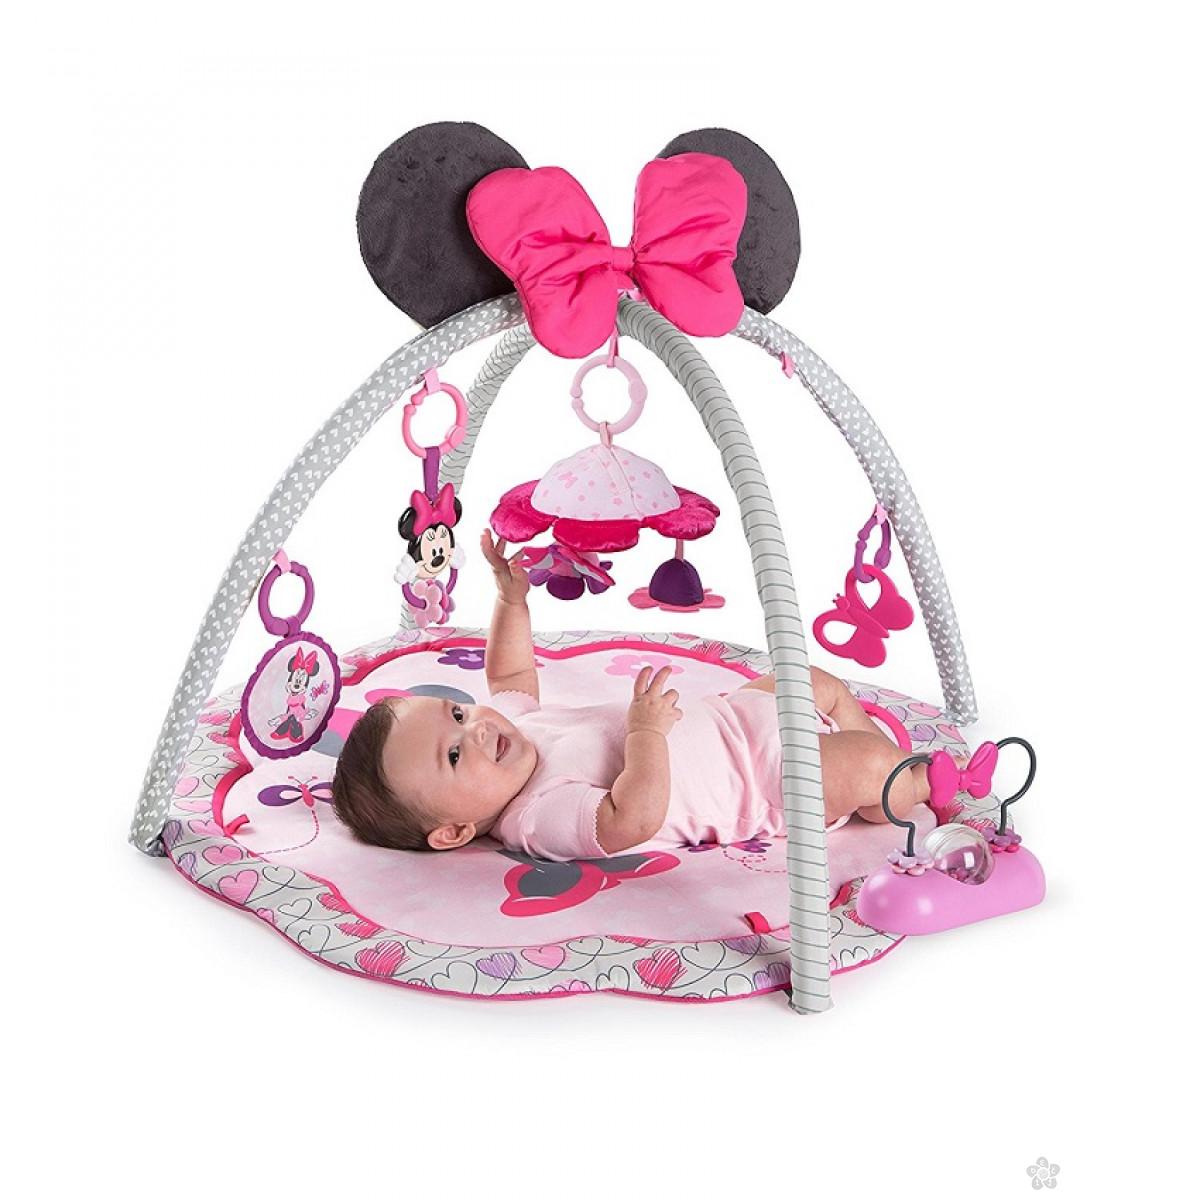 Baby Podloga za Igru Minnie Mouse Garden Fun, sku11097 